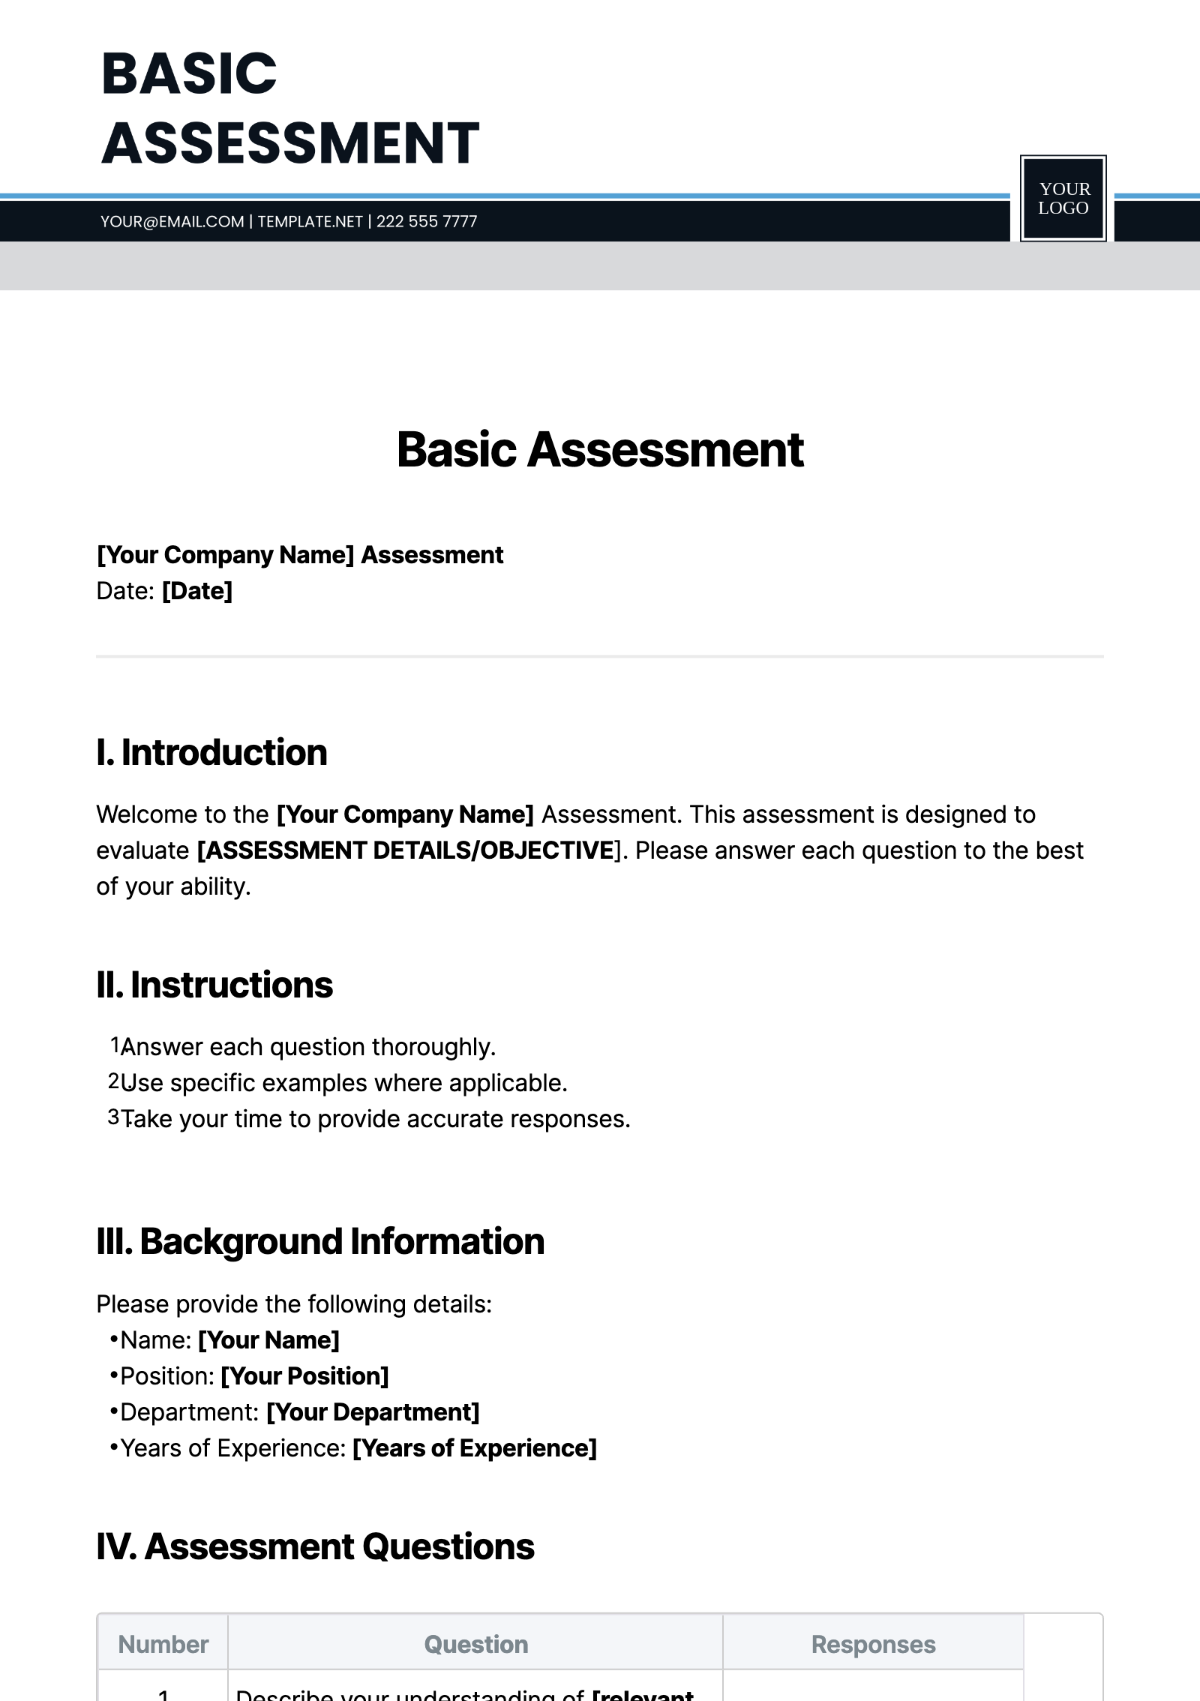 Free Basic Assessment Template